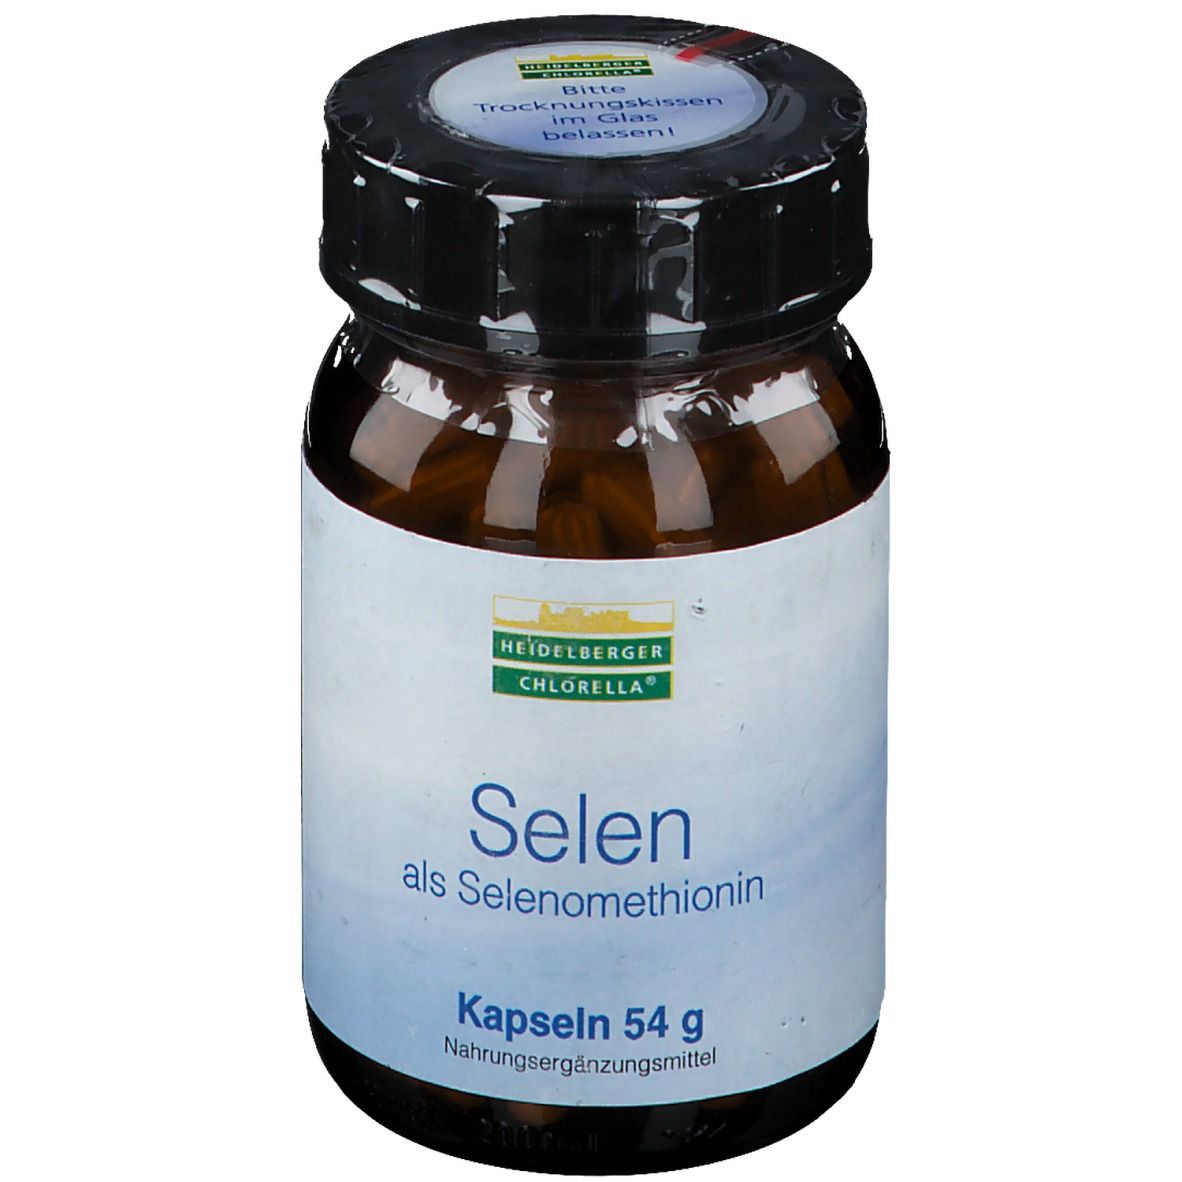 Heidelberger Chlorella® Selen als Selenomethionin Kapseln